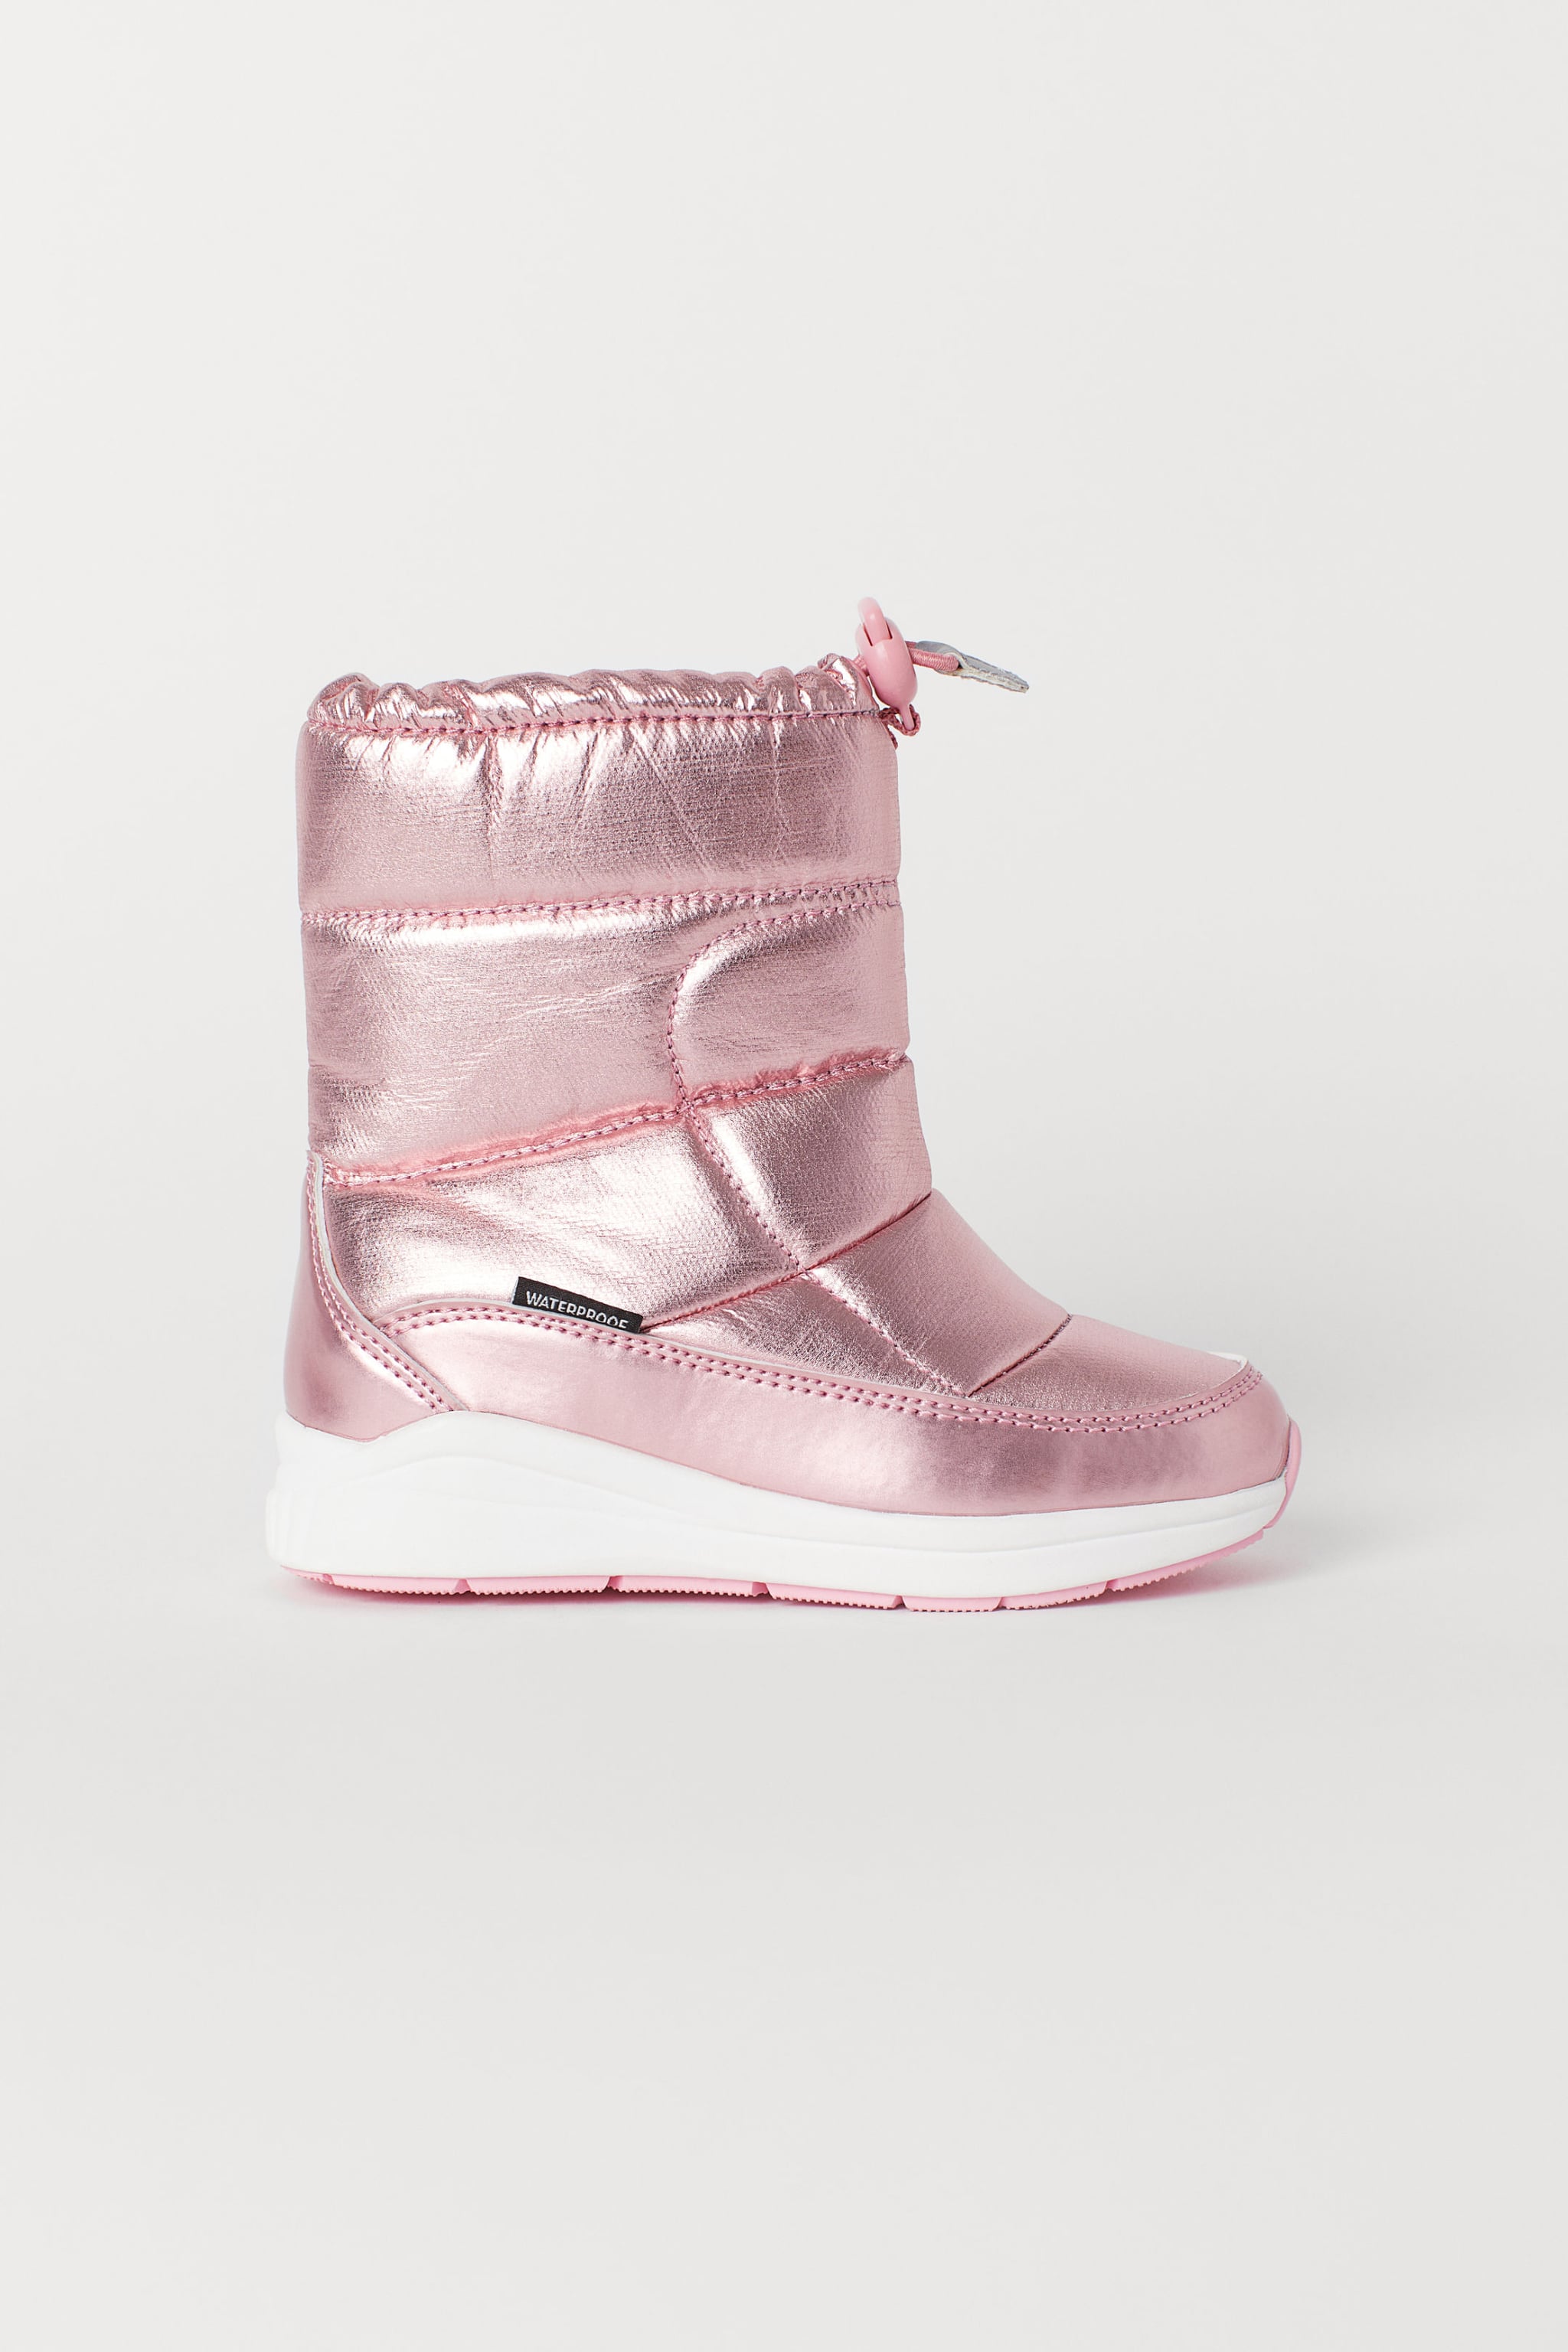 H\u0026M Waterproof Boots | Best Snow Boots 